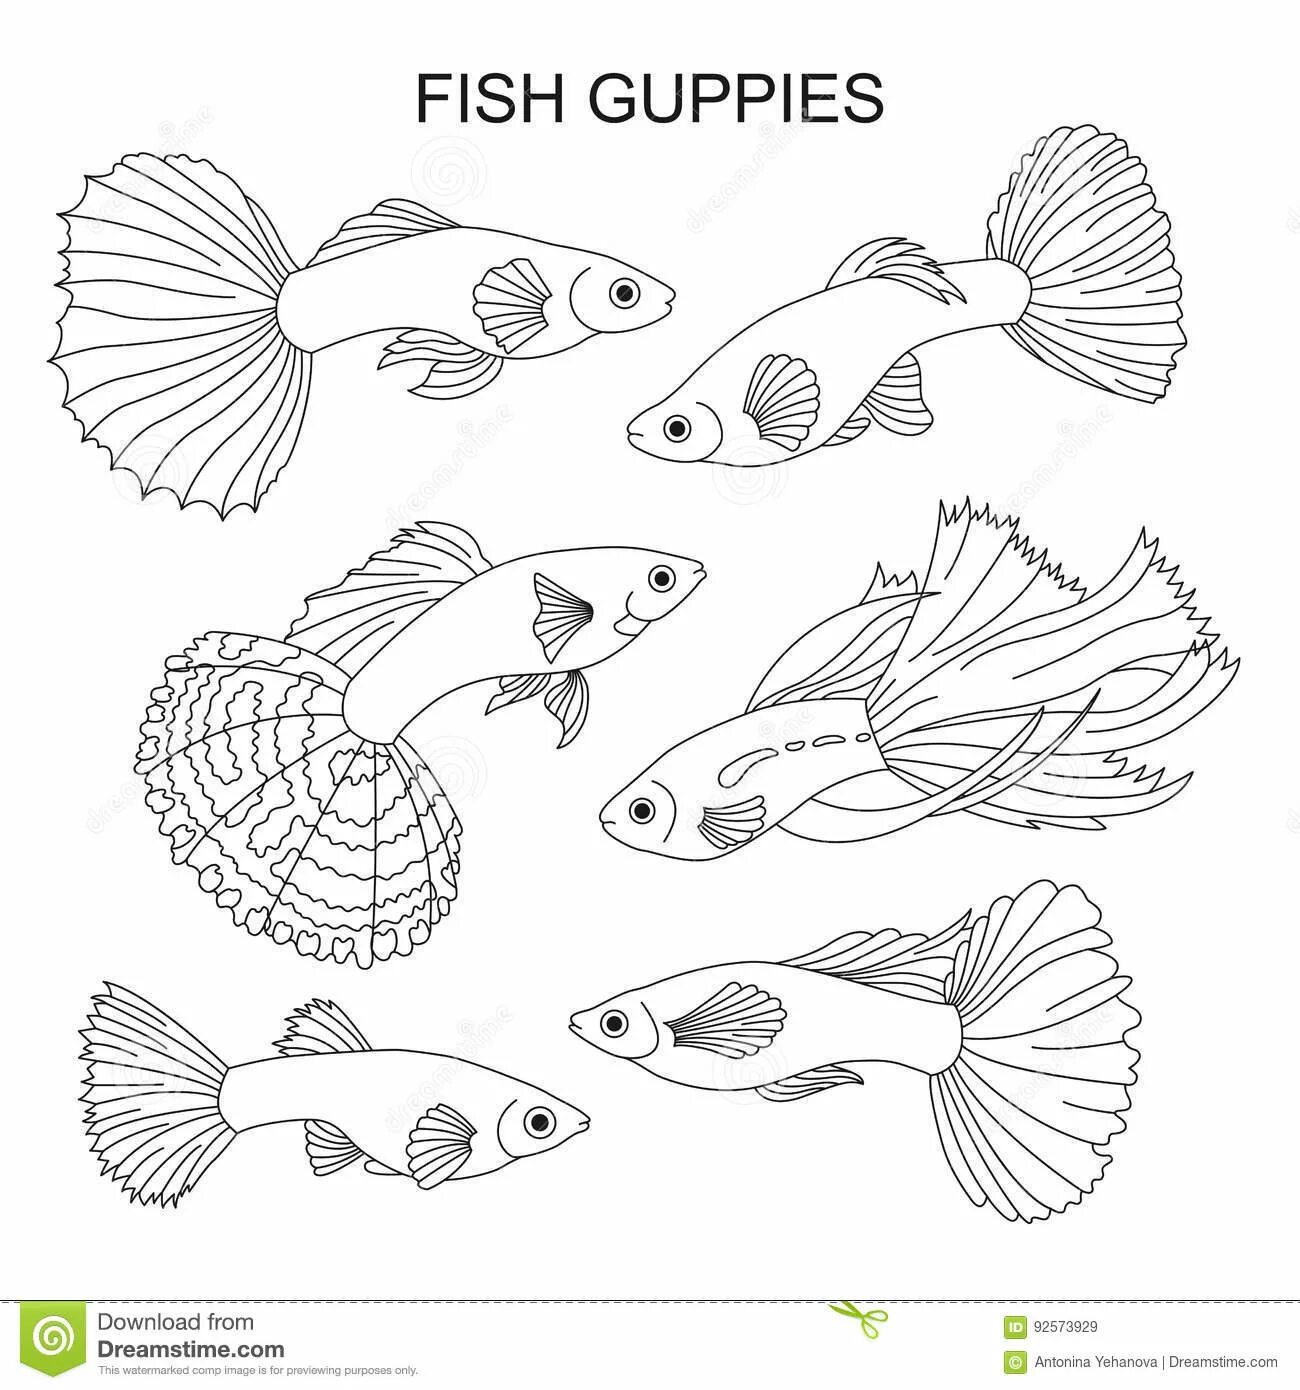 Guppy fish #9